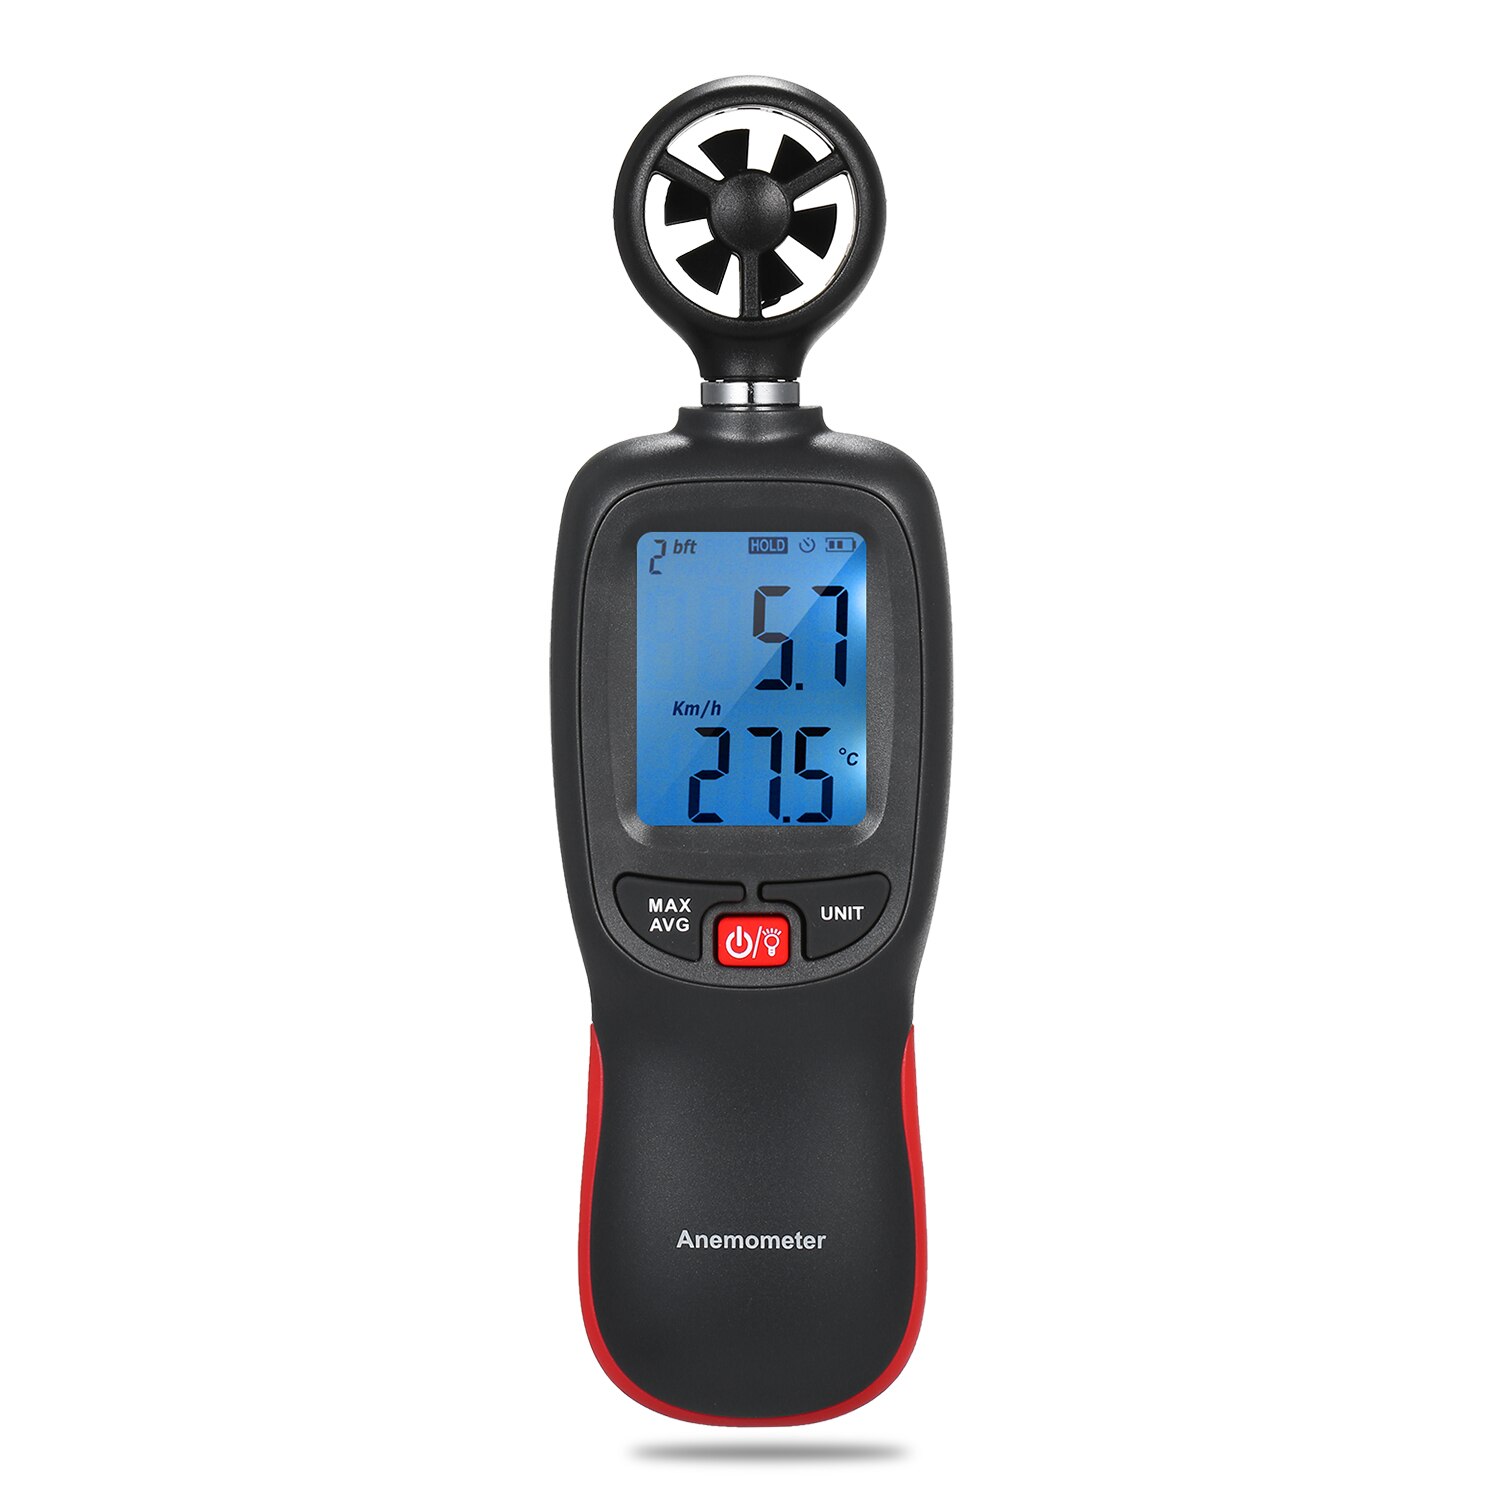 Digitale Anemometer Thermometer Handheld Pocket Wind Meter Luchtsnelheid Temperatuur Tester Met Max/Data Hold Modus